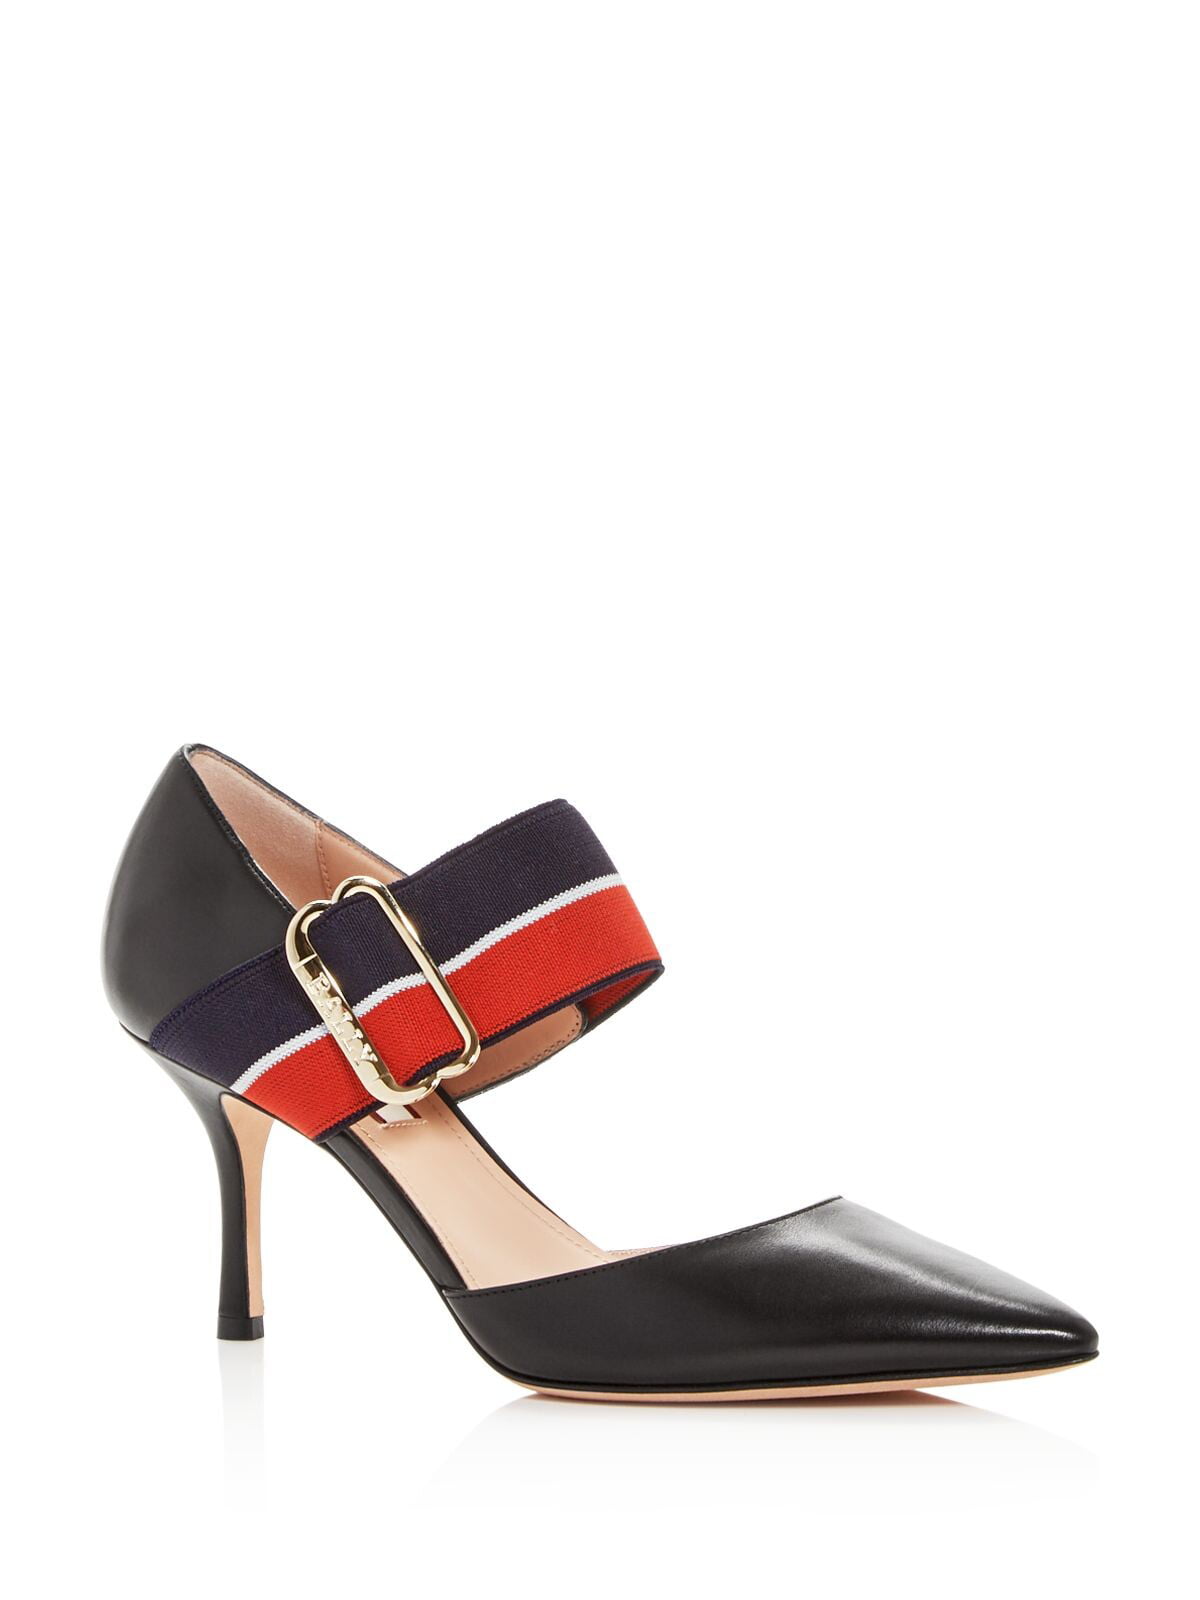 Bally of Switzerland pumps Sz. 38 black leather Career+ EUC womens shoes  heels | eBay